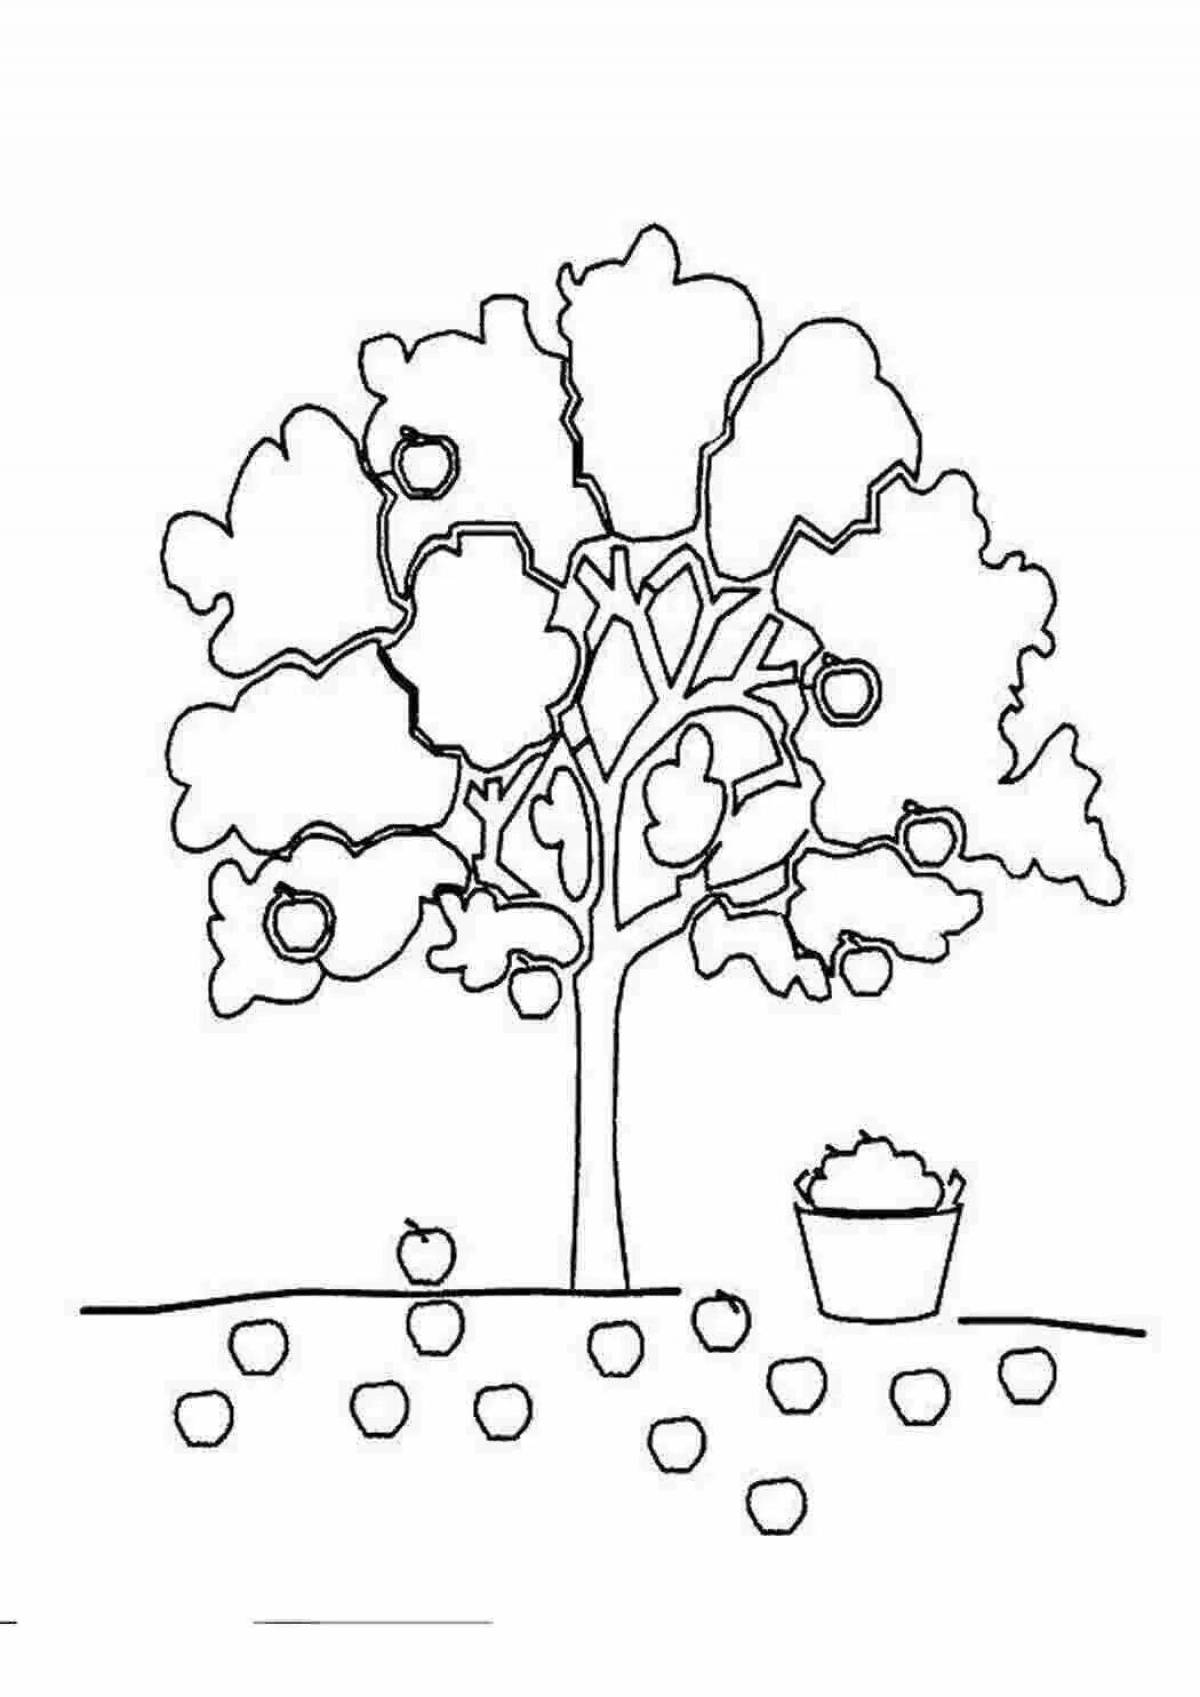 Colorific tree coloring page для детей 4-5 лет